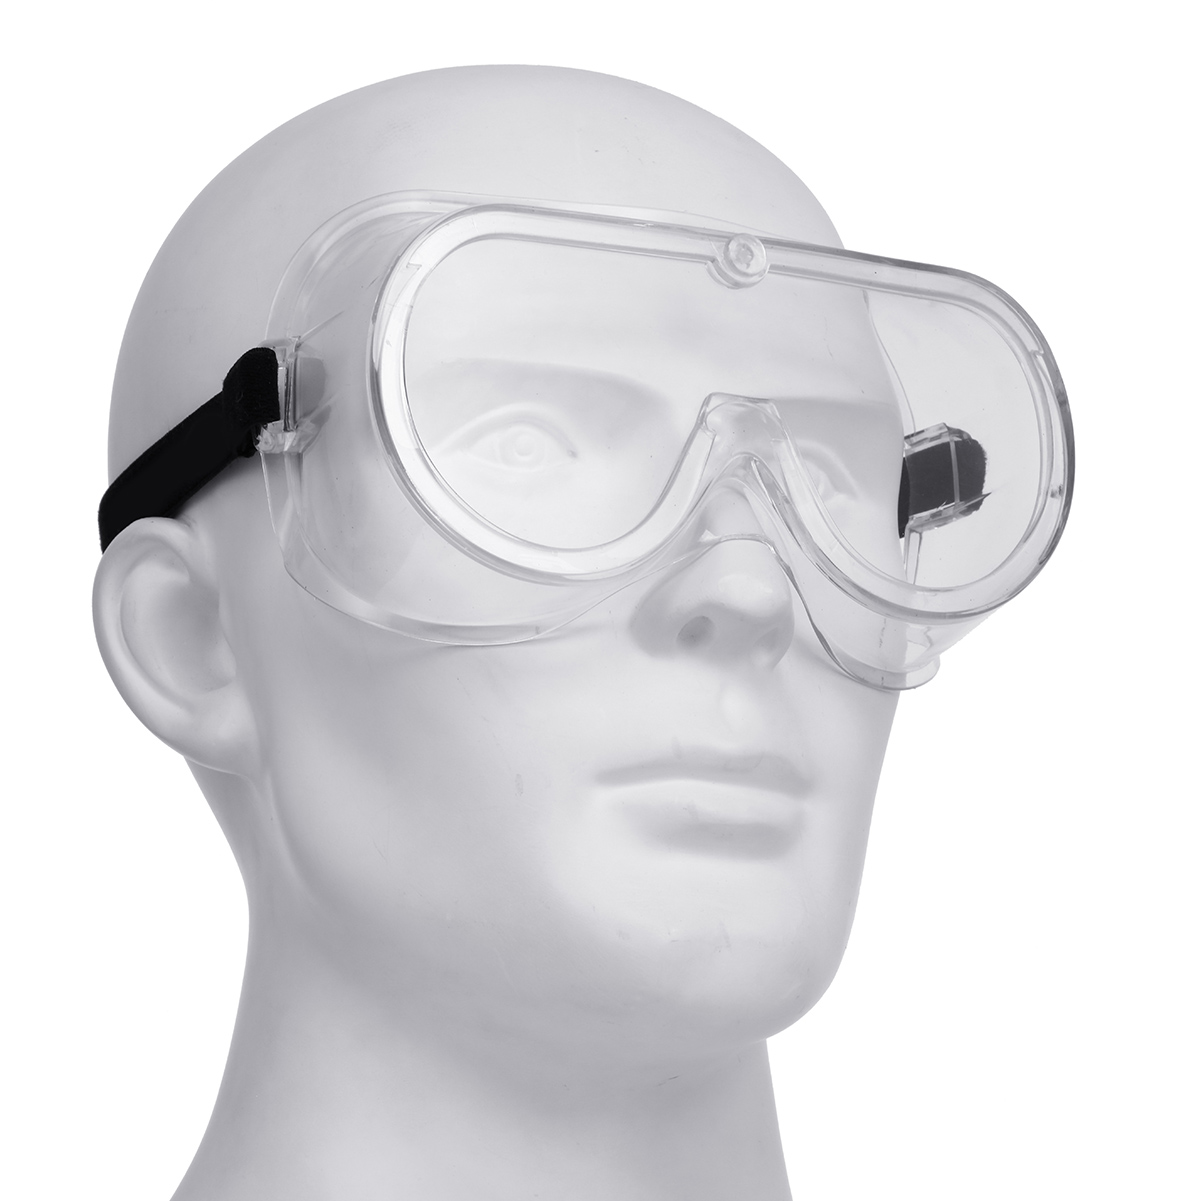 Safety-Goggles-Splash-Resistant-Lens-Breathable-Valves-Anti-Fog-Protative-Tools-1660391-7